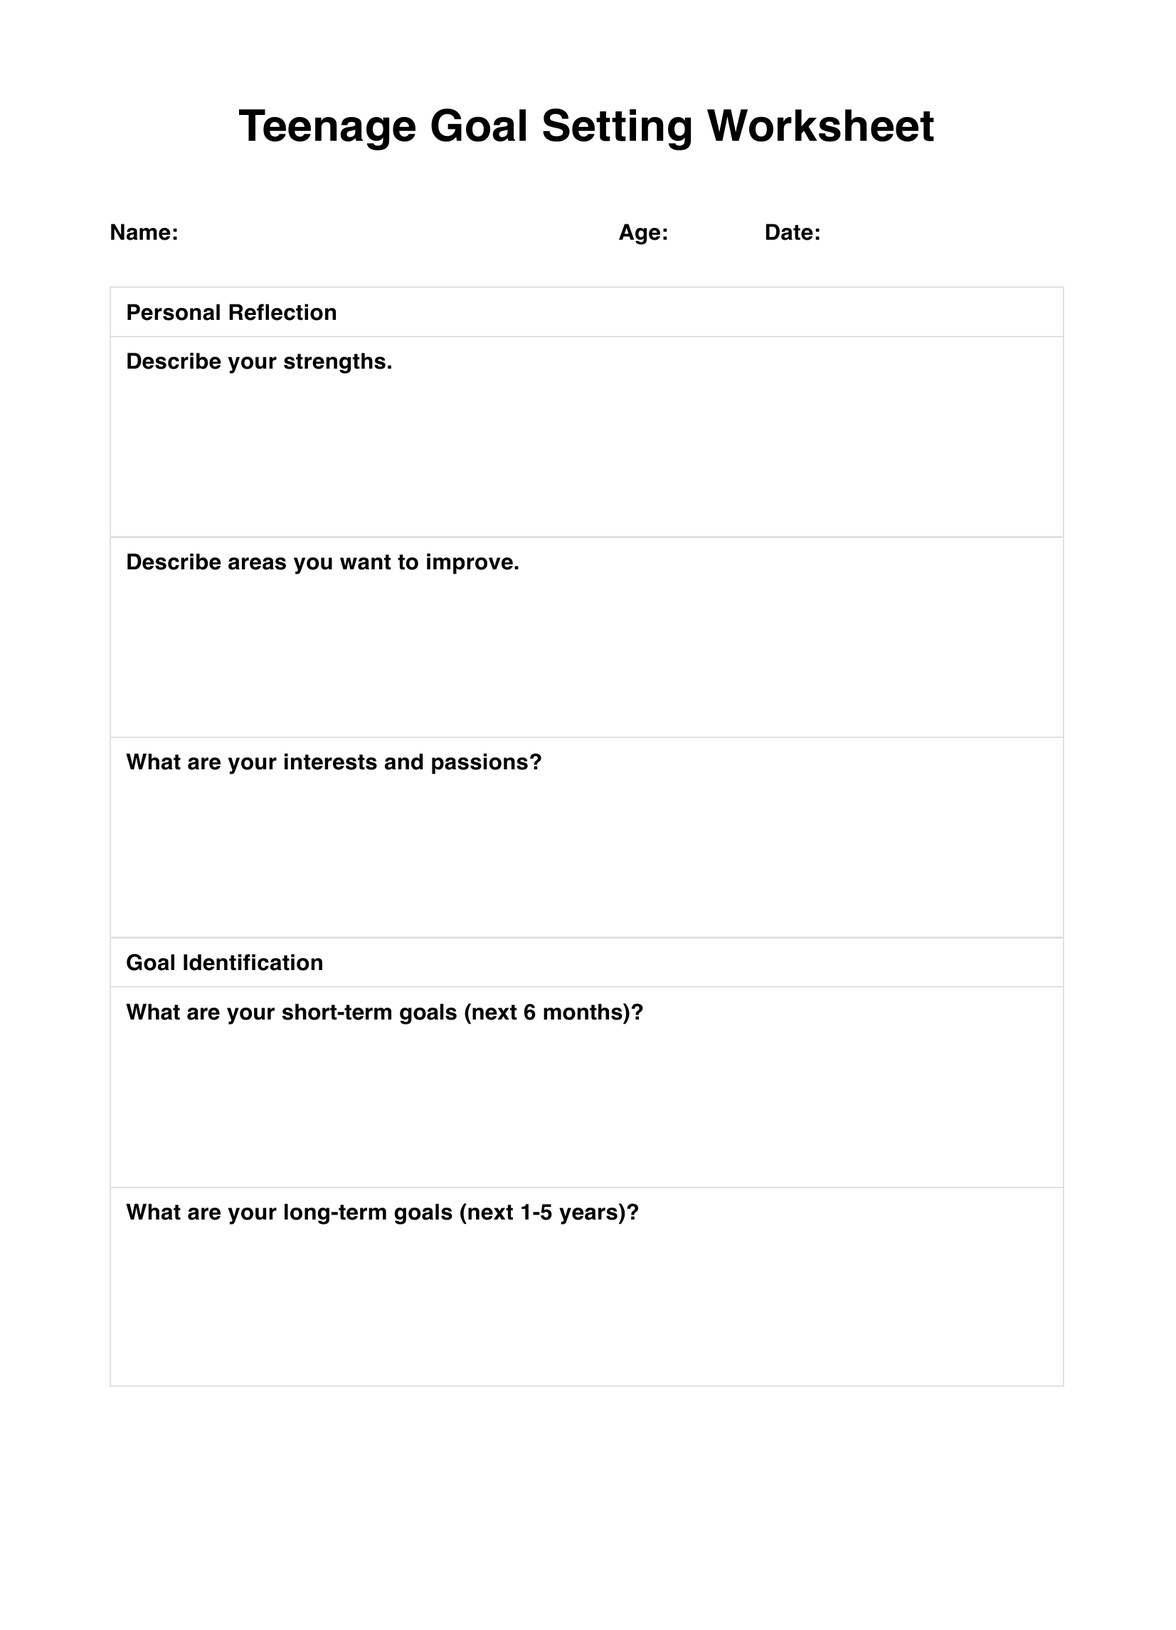 Teenage Goal Setting Worksheets PDF Example